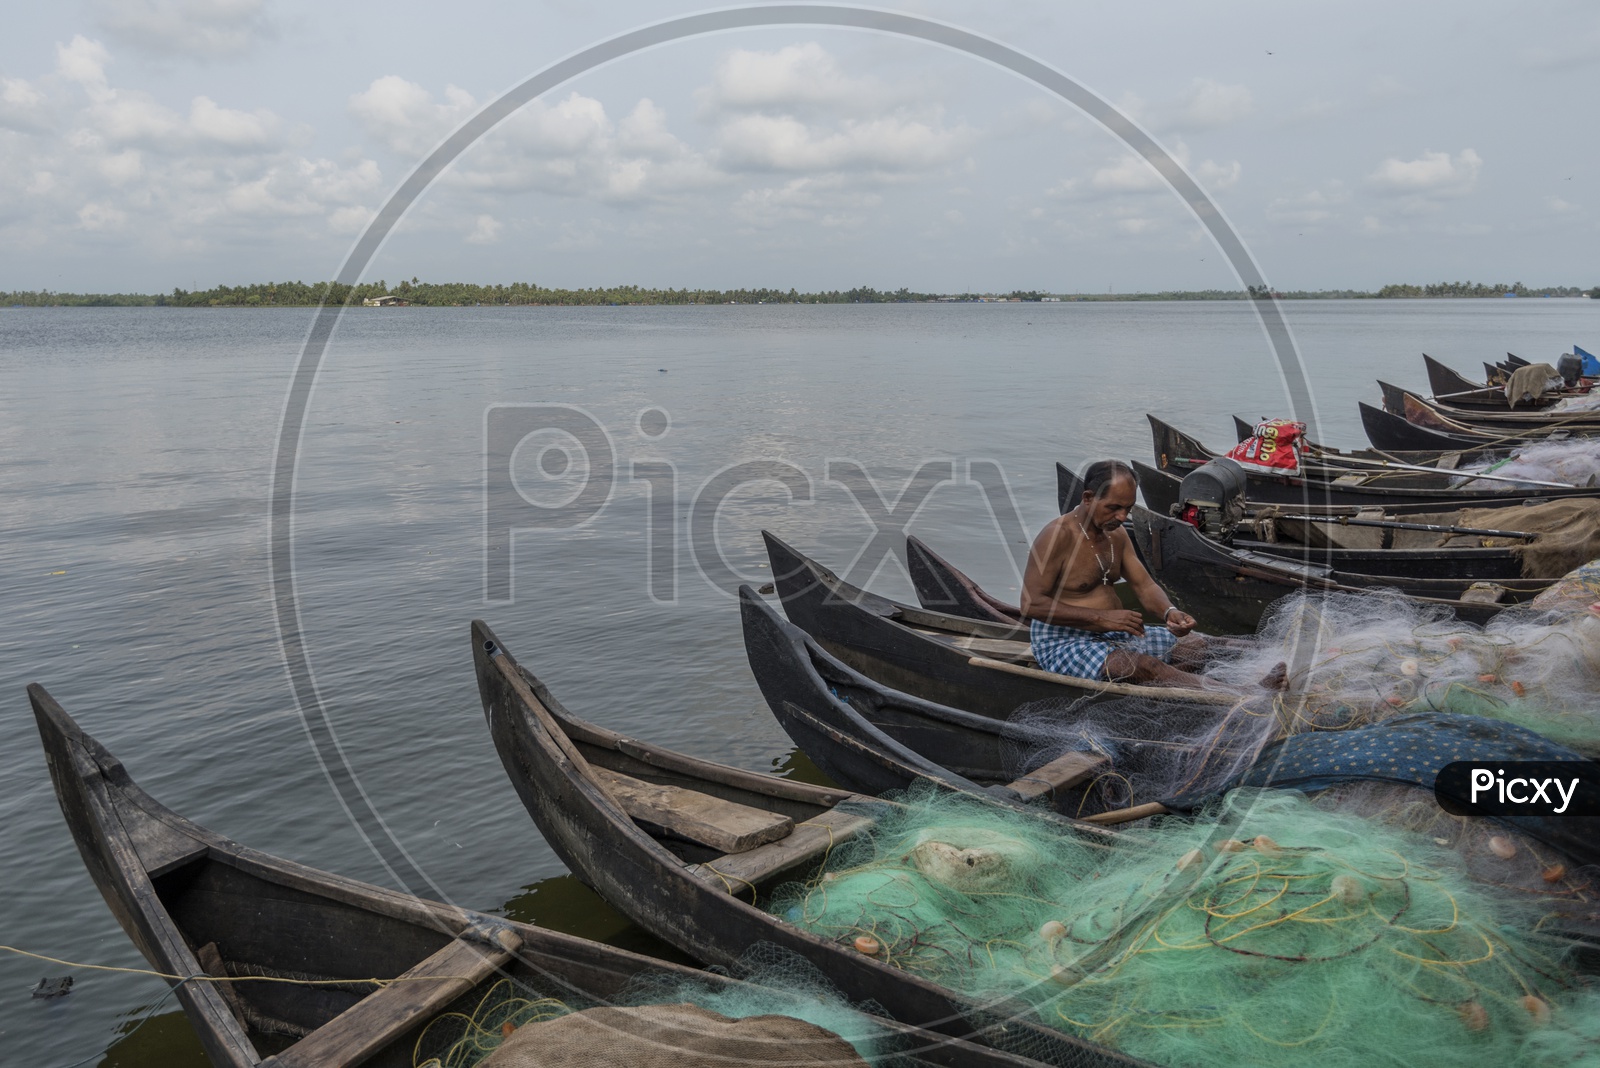 A kerala Fisherman Repairing His Fishing net sitting on boats